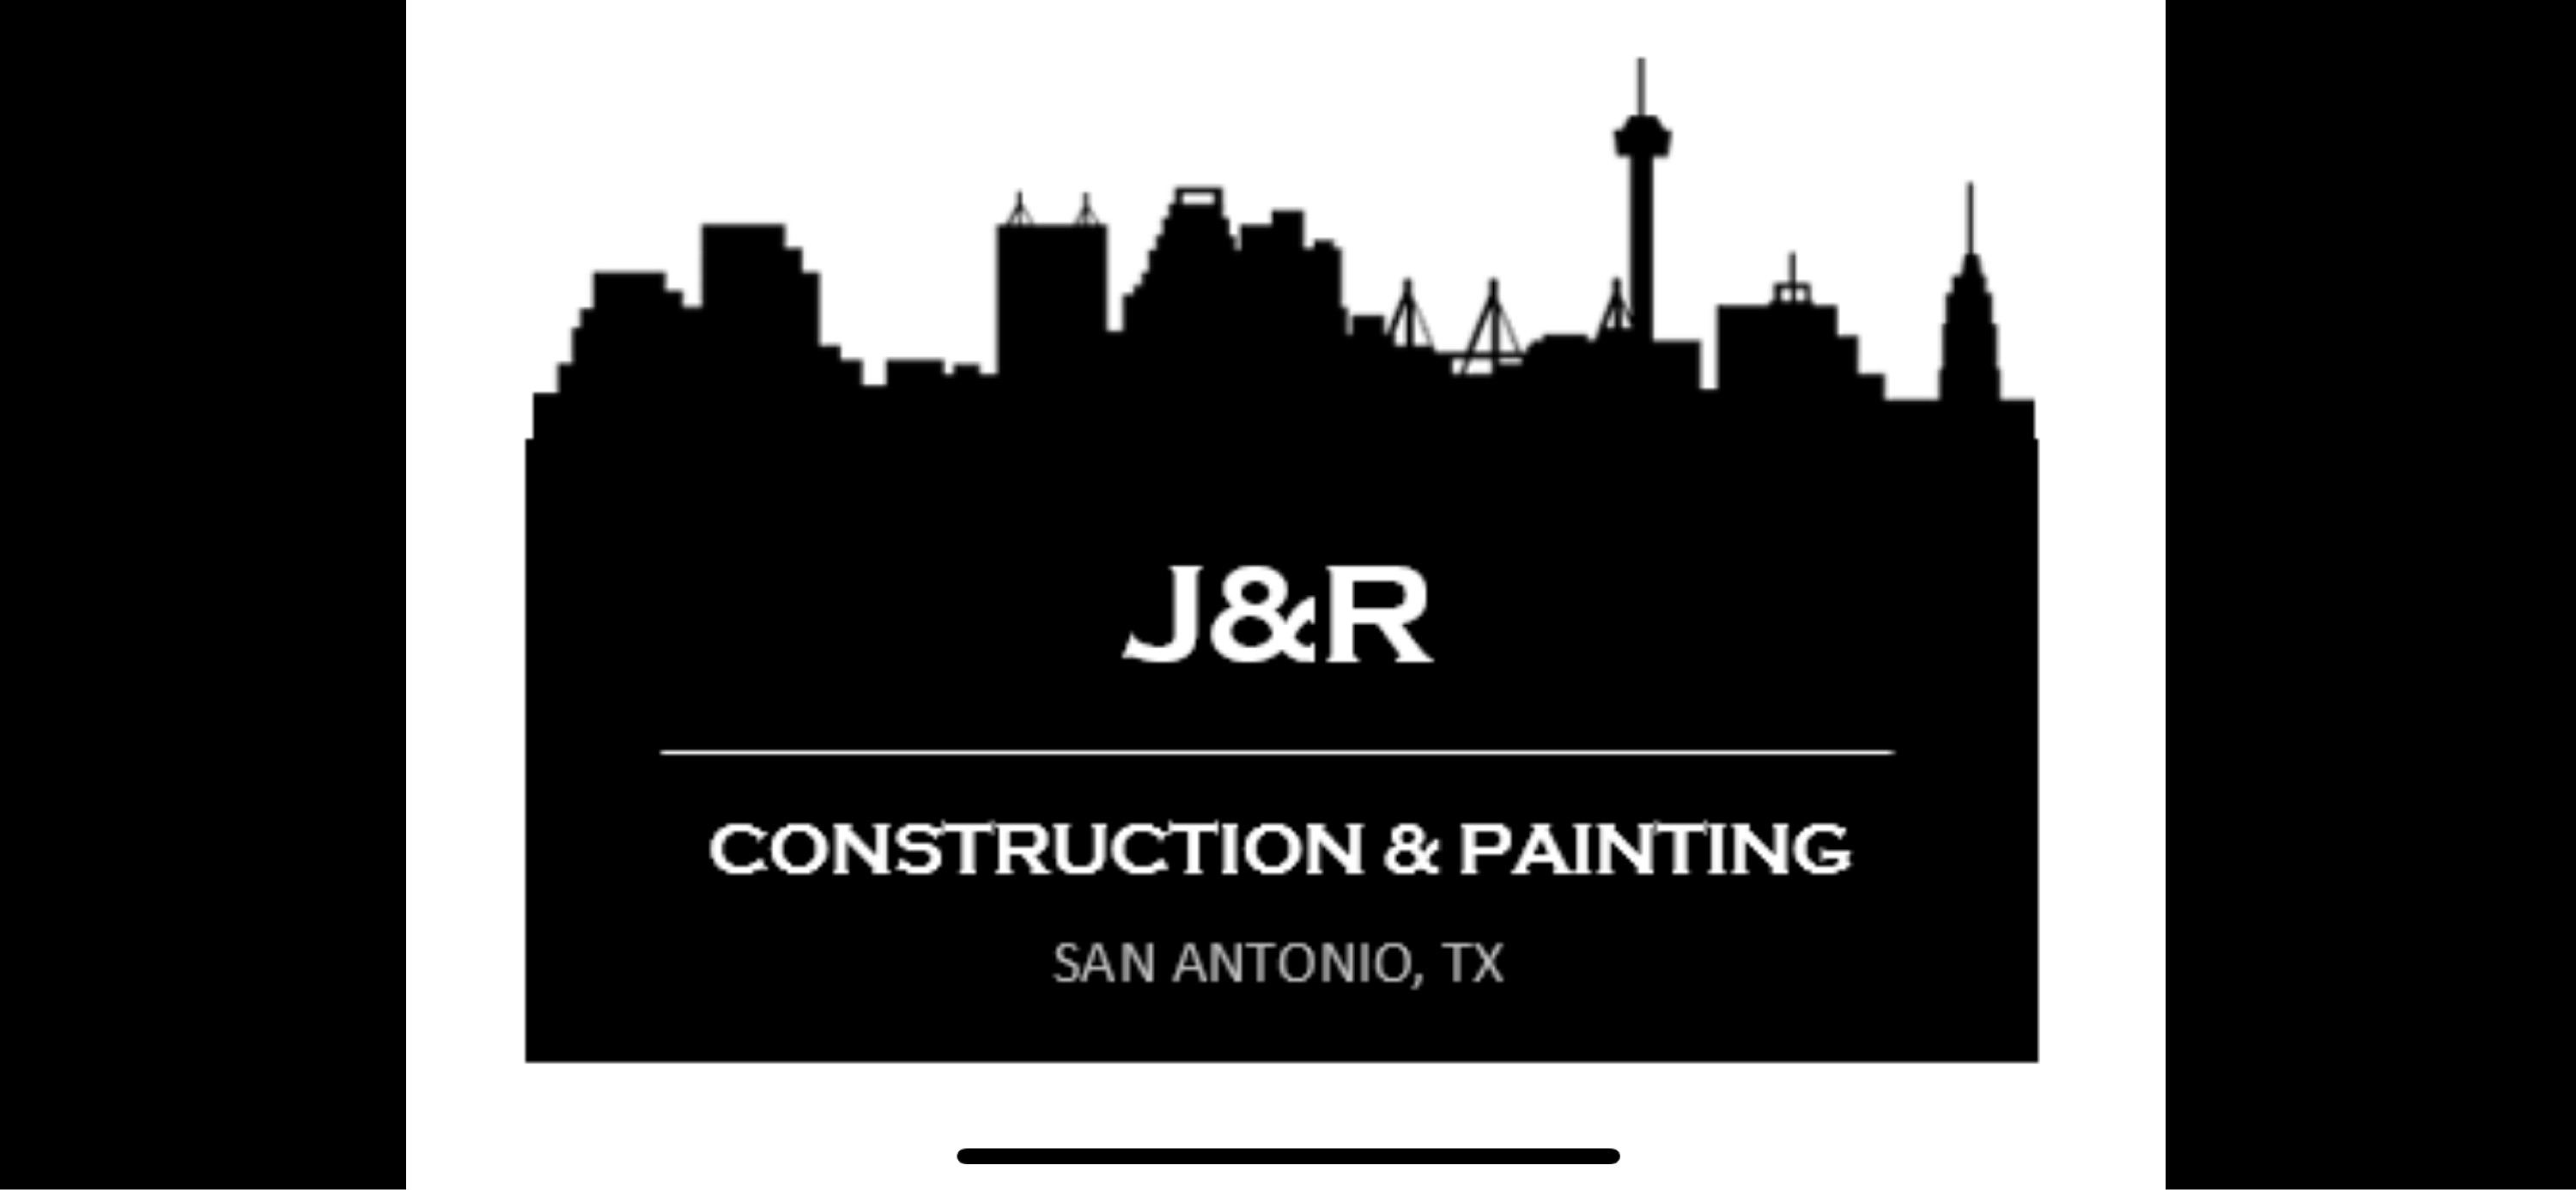 J&R Construction & Painting Logo